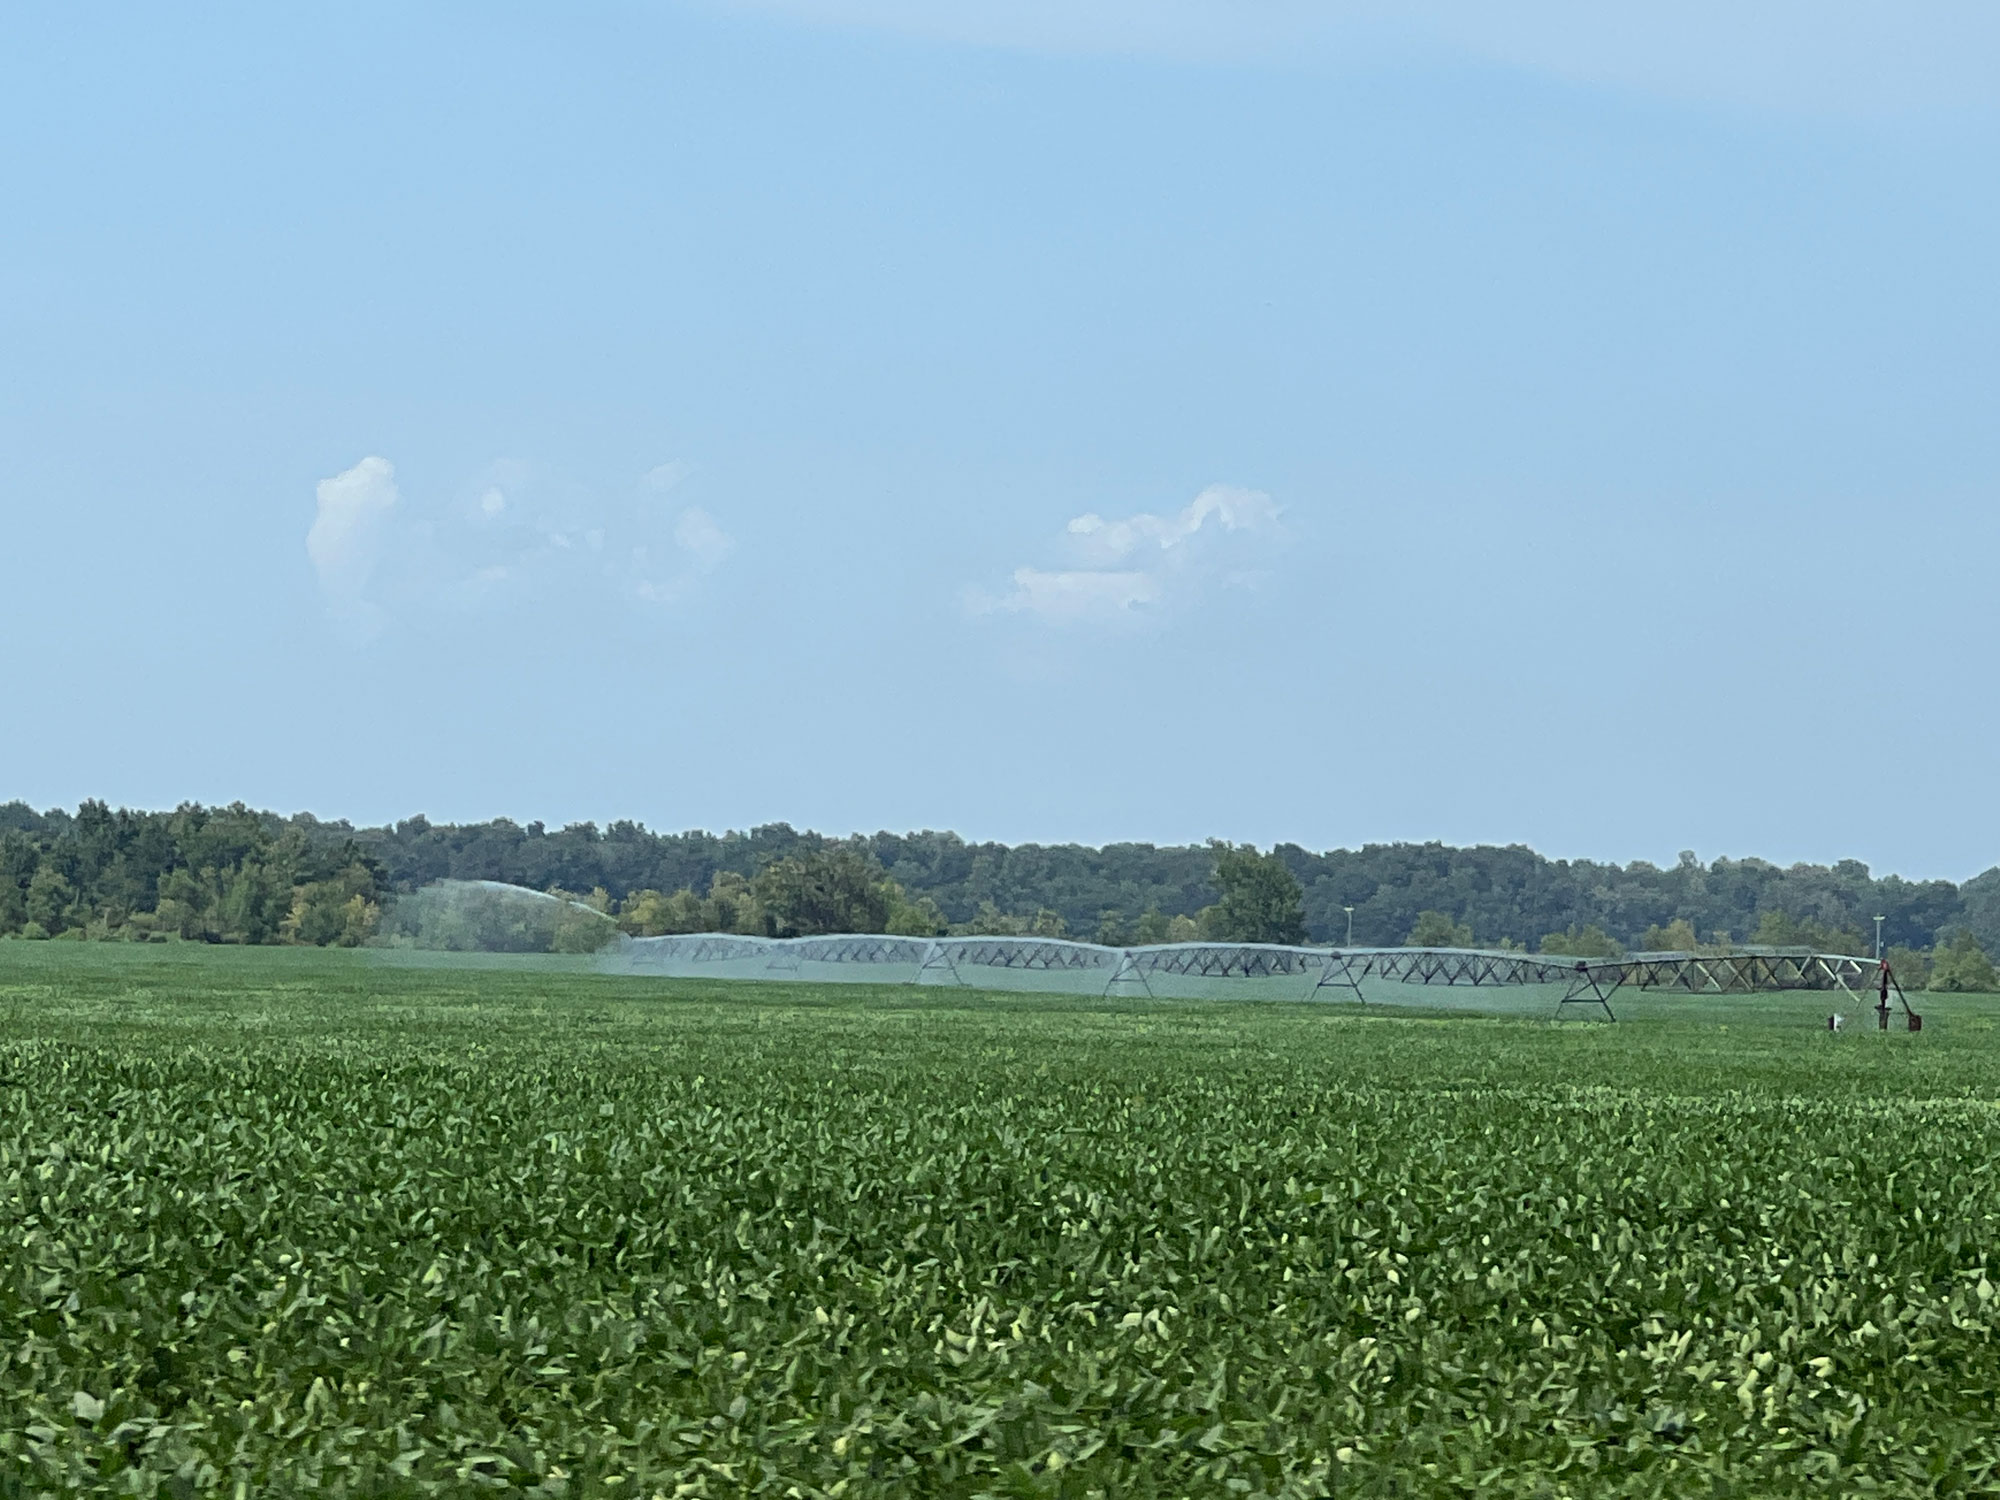 Irrigation pivot watering green crop under bright blue sky.